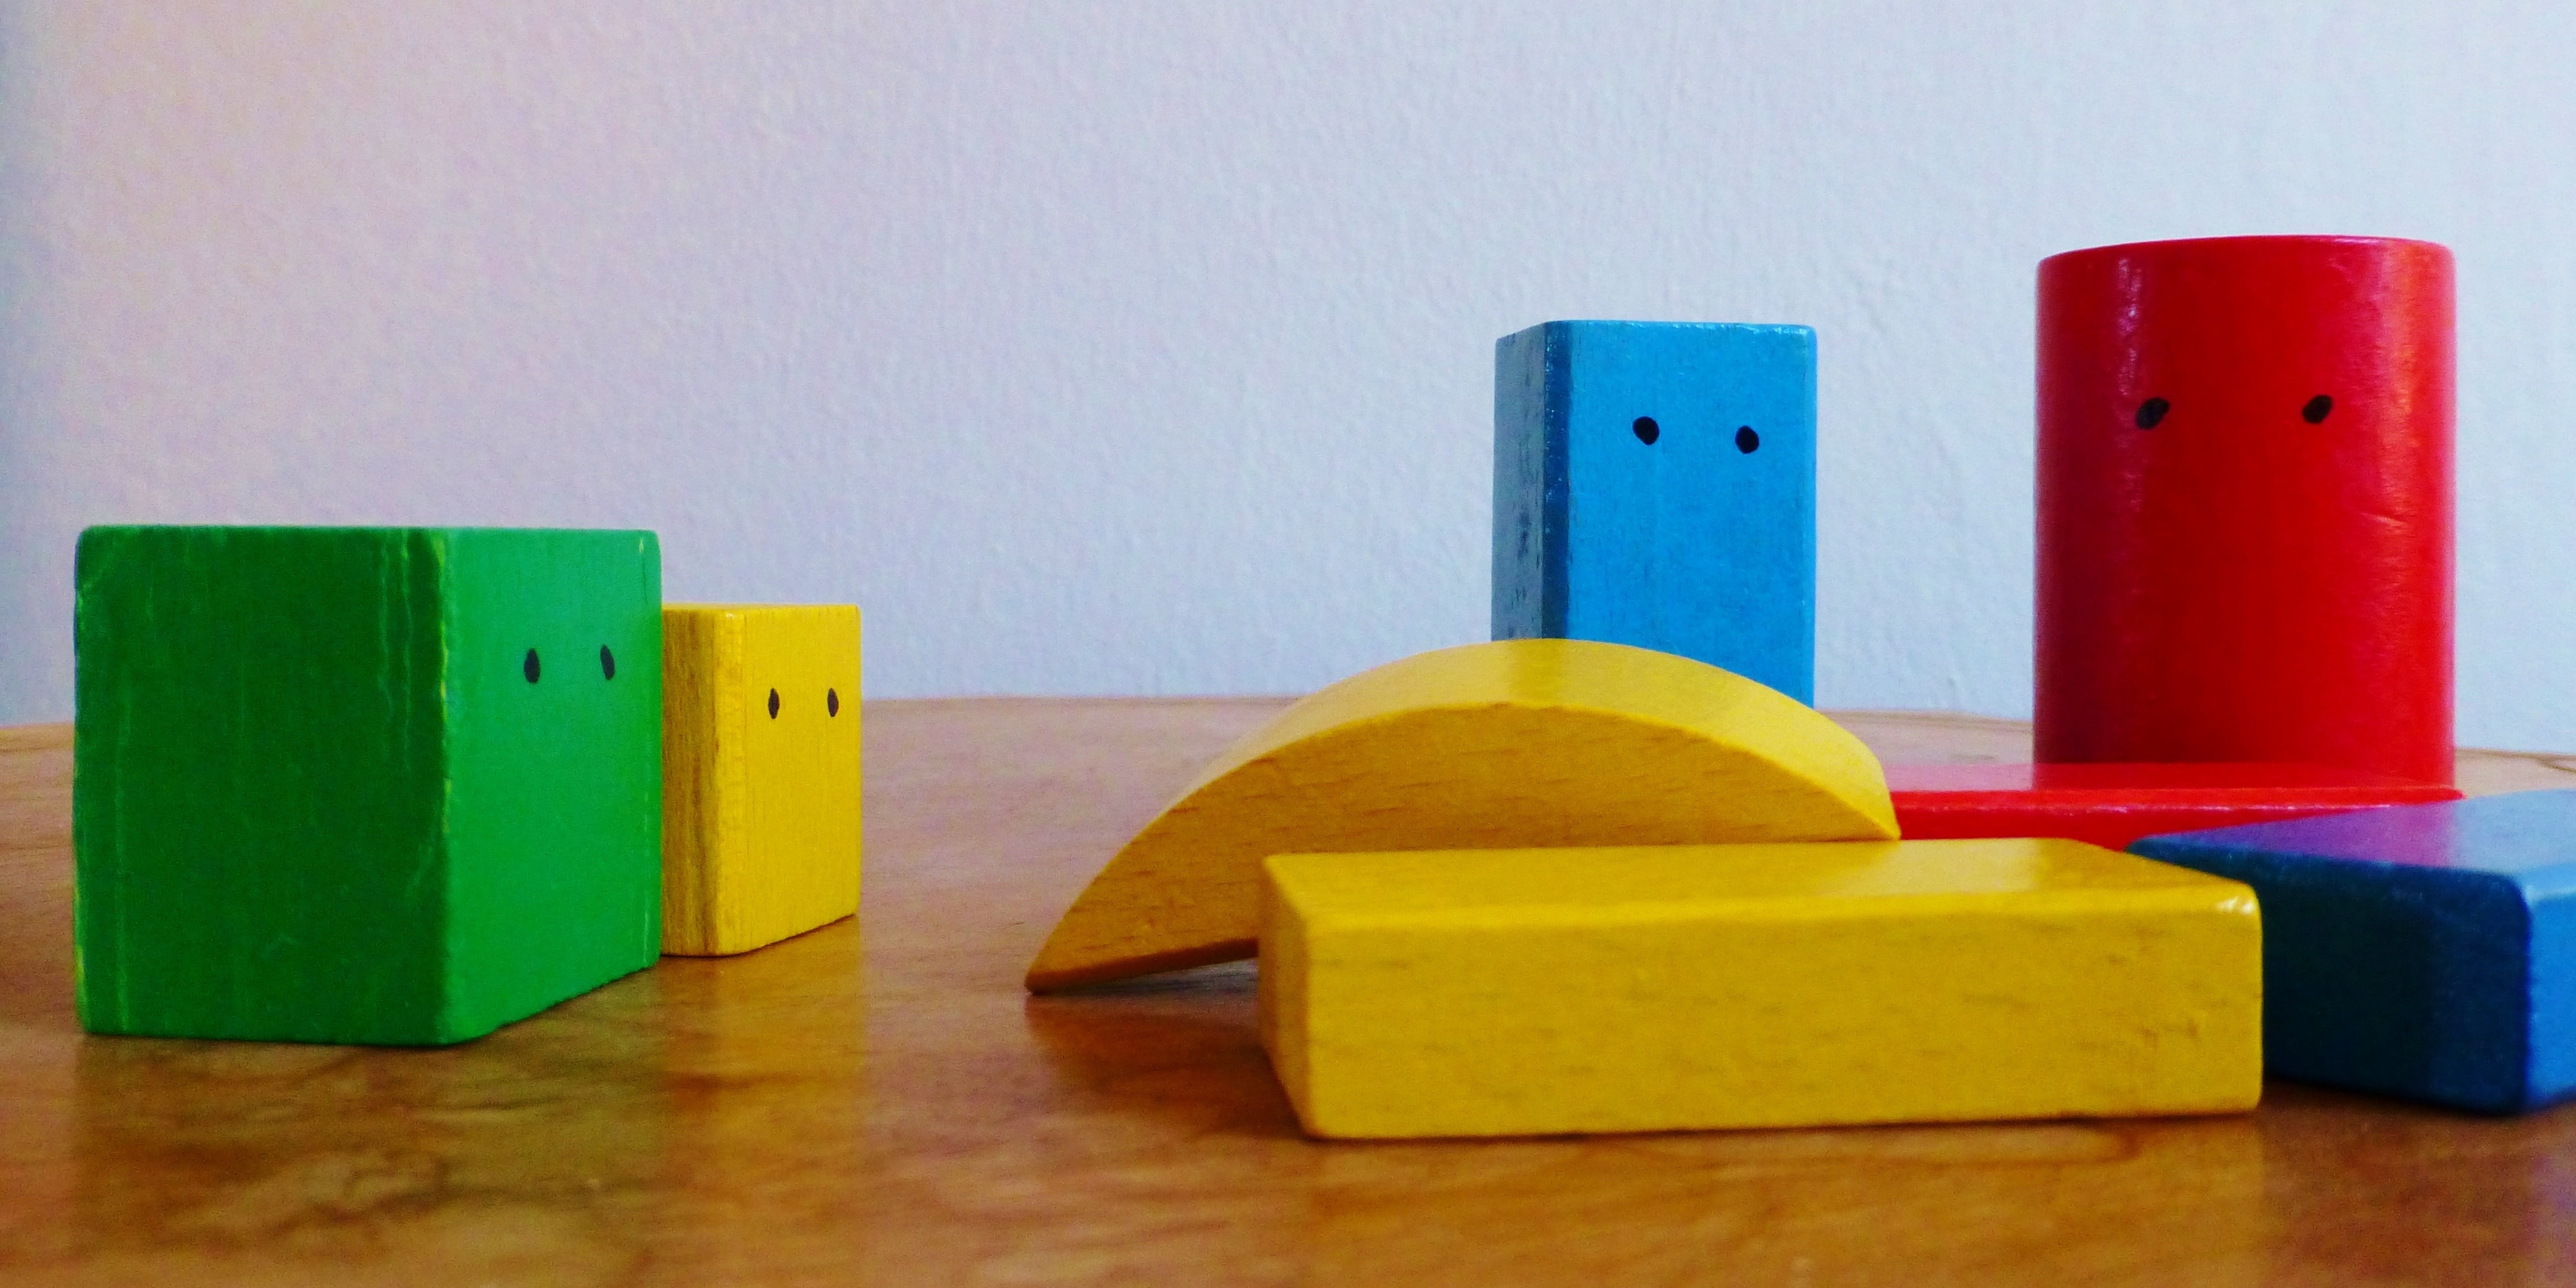 muli color blocks toy